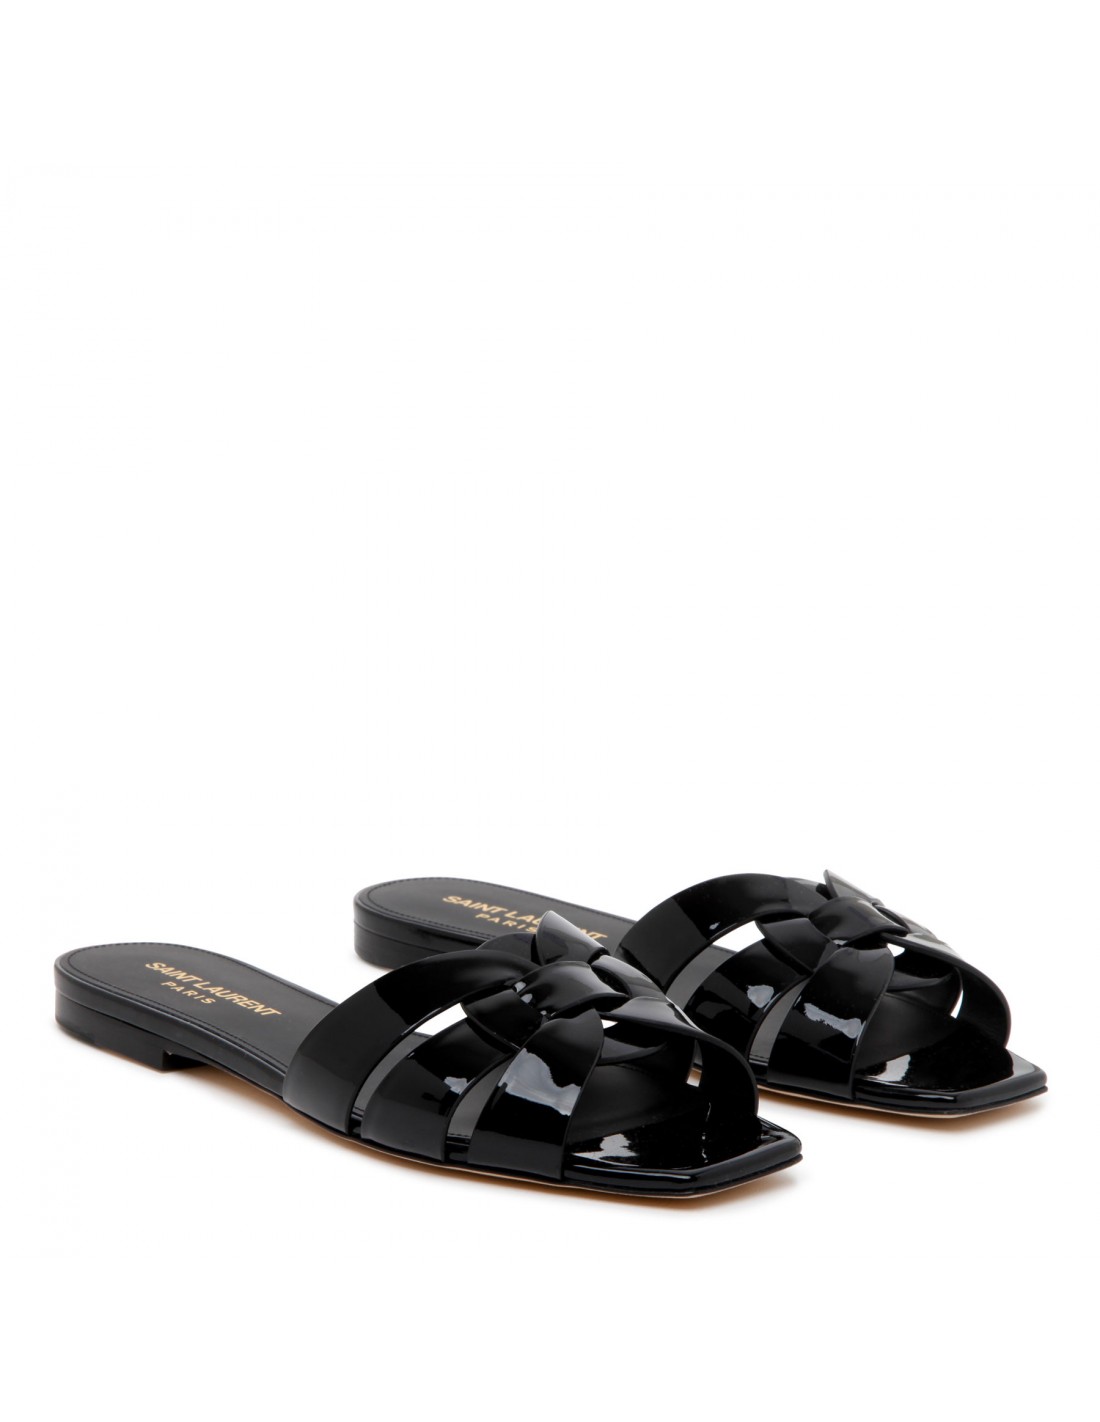 Tribute black slide sandals